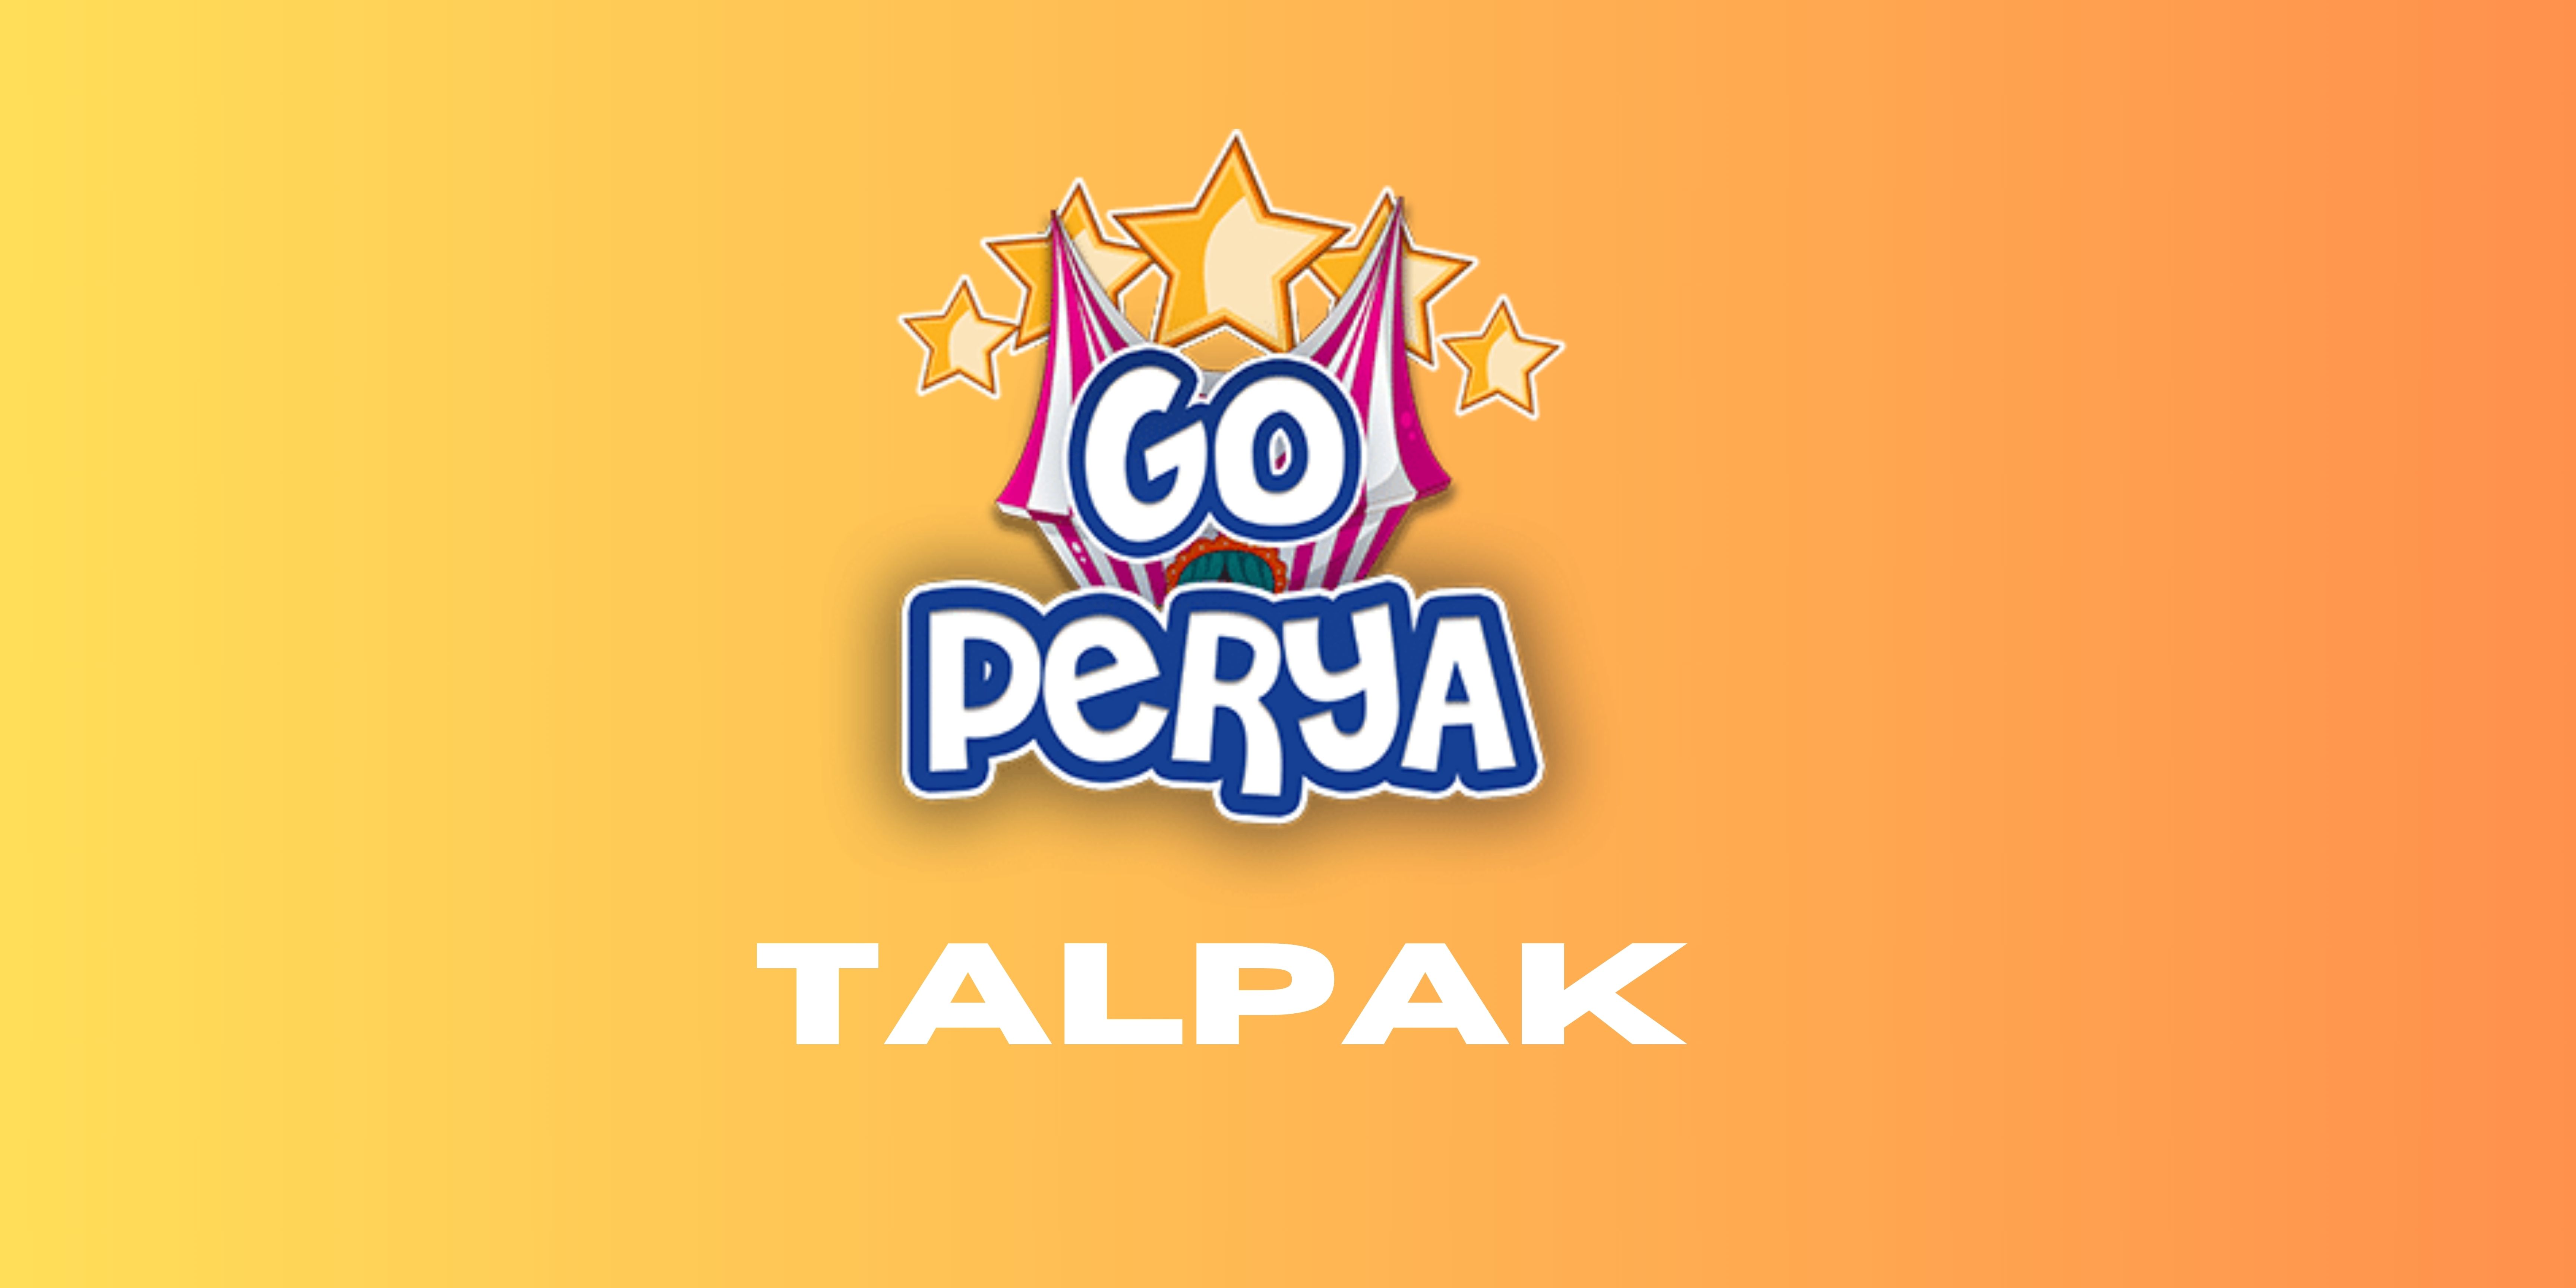 Go Perya Talpak 